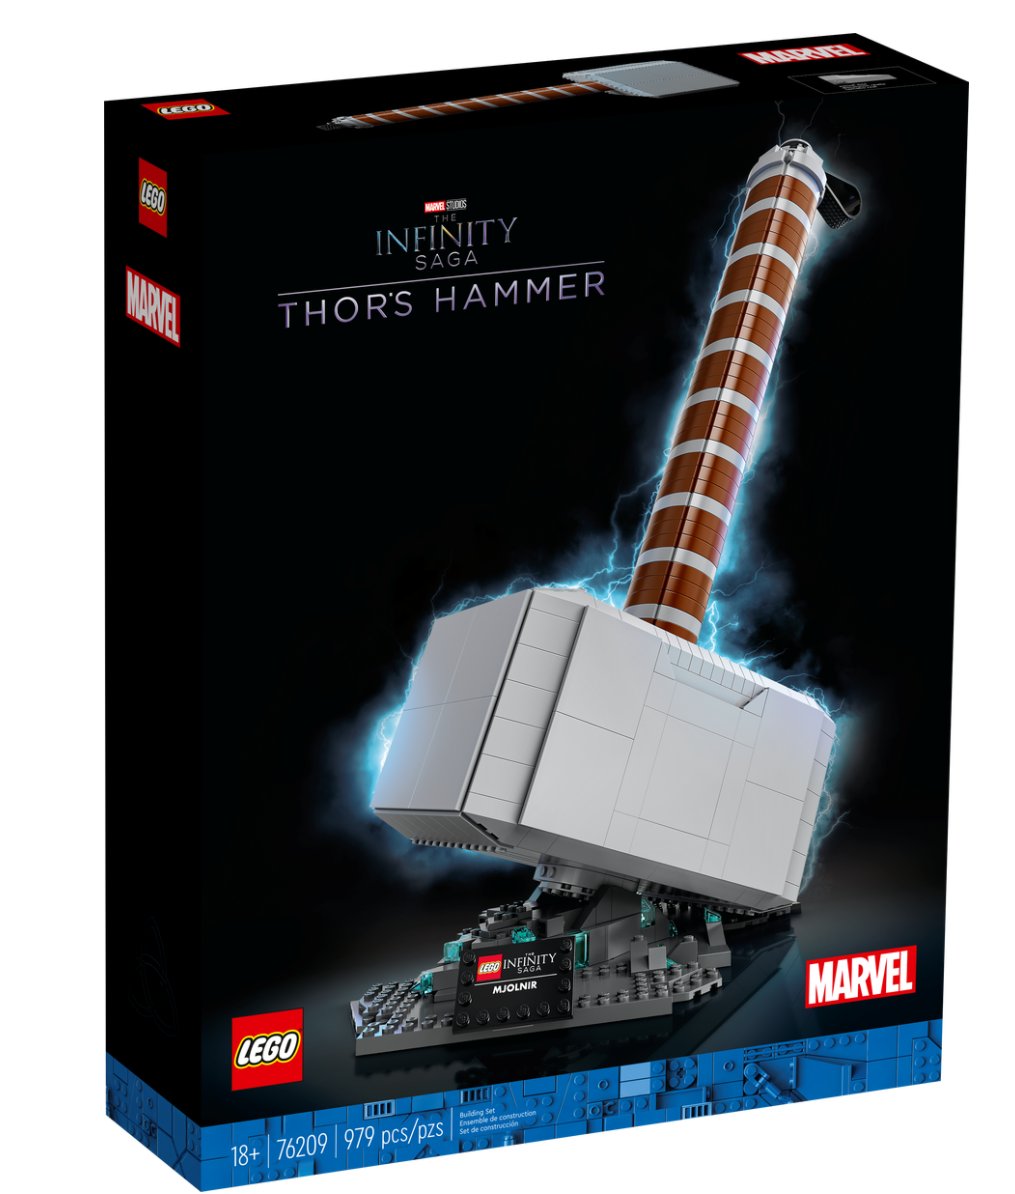 RT @Wario64: LEGO Thor's Hammer available on LEGO Store ($99.99) https://t.co/V7jLasLFpm #ad https://t.co/0JXOiv2g3Q